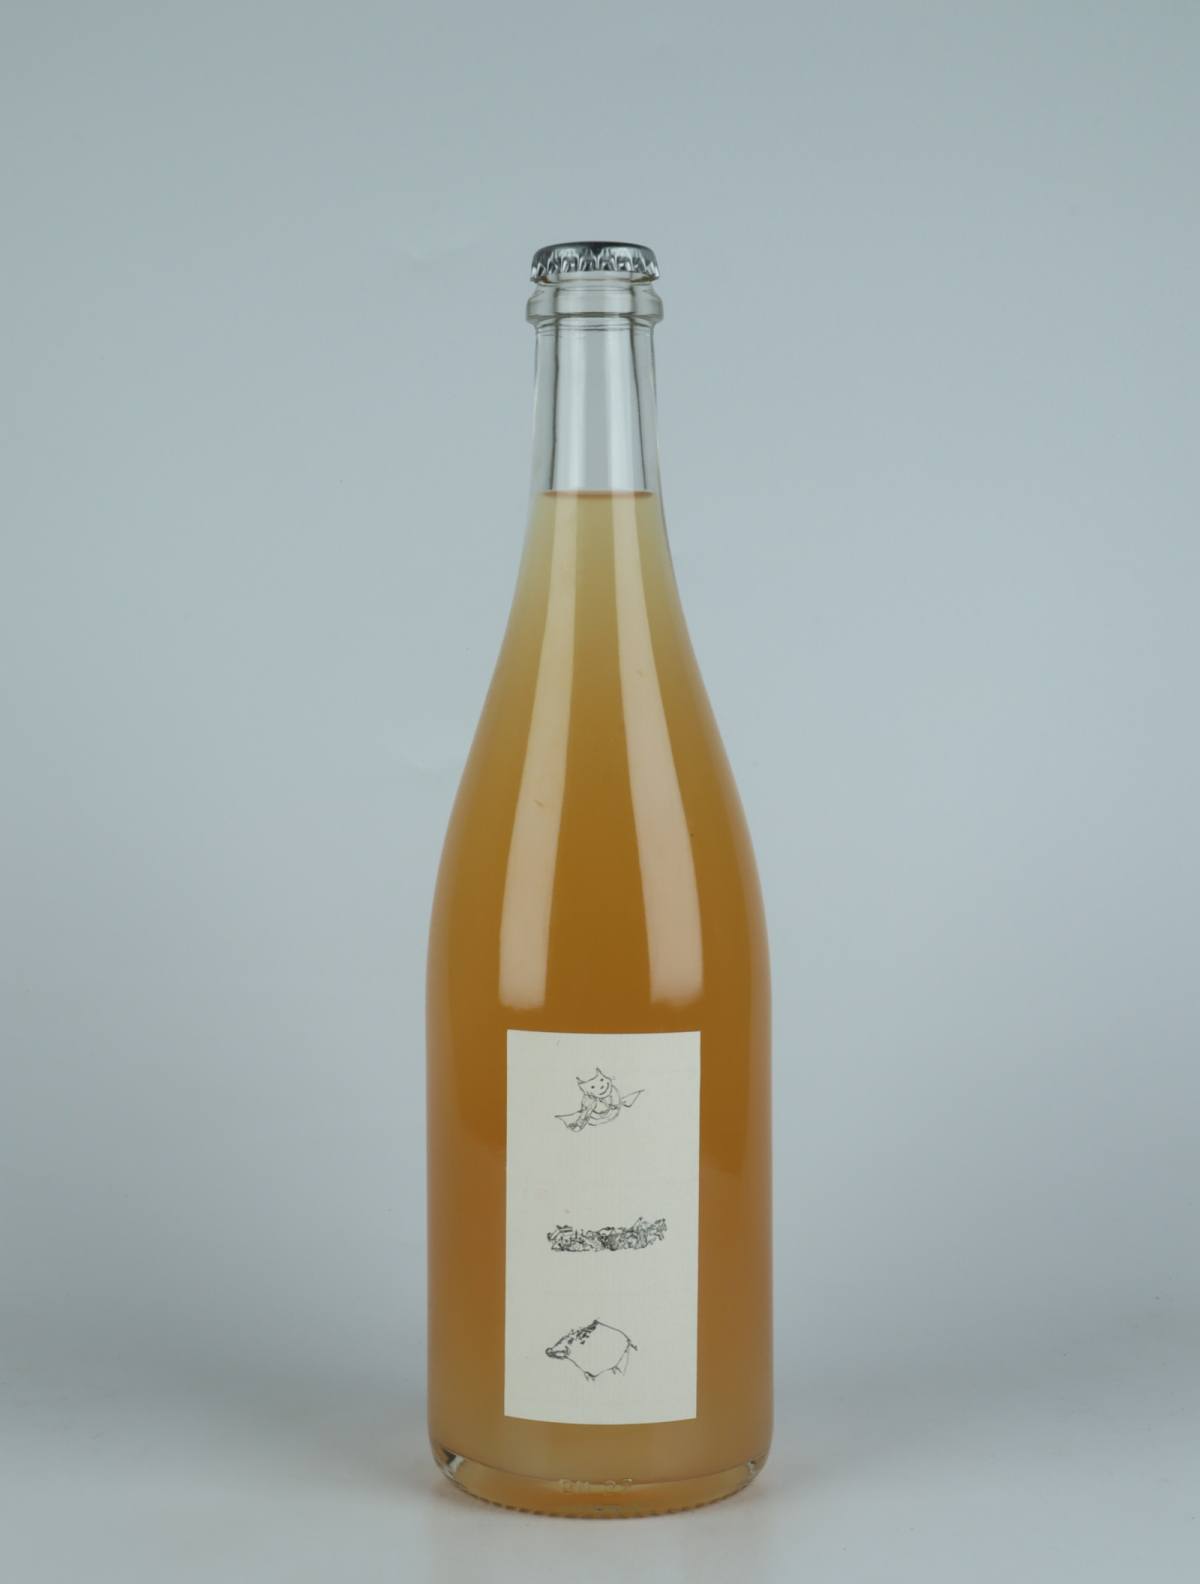 A bottle 2022 Ciulin White wine from Absurde Génie des Fleurs, Languedoc in France